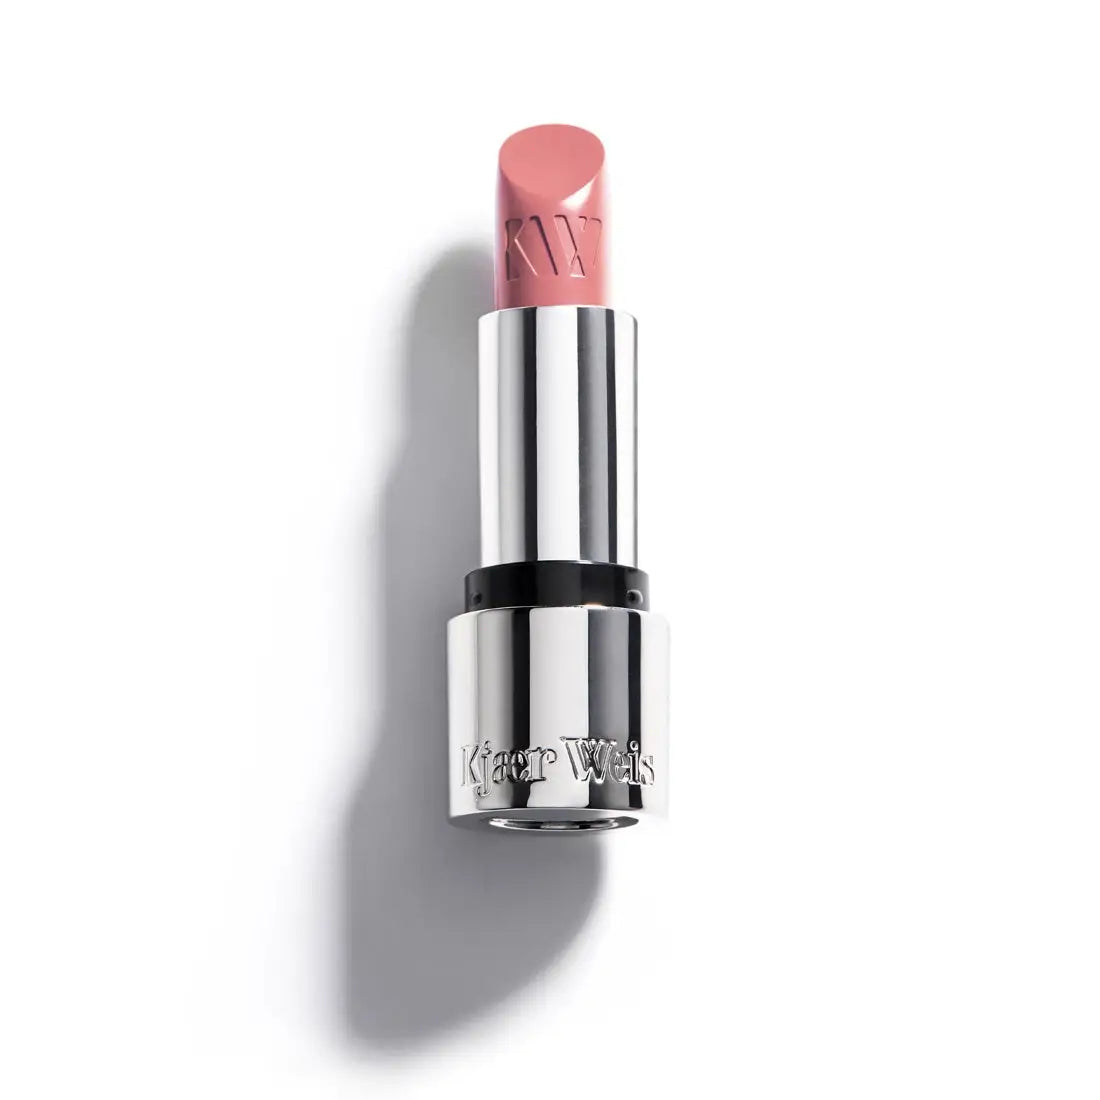 Kjaer Weis Lipstick Compact - Gracious Free Shipping 